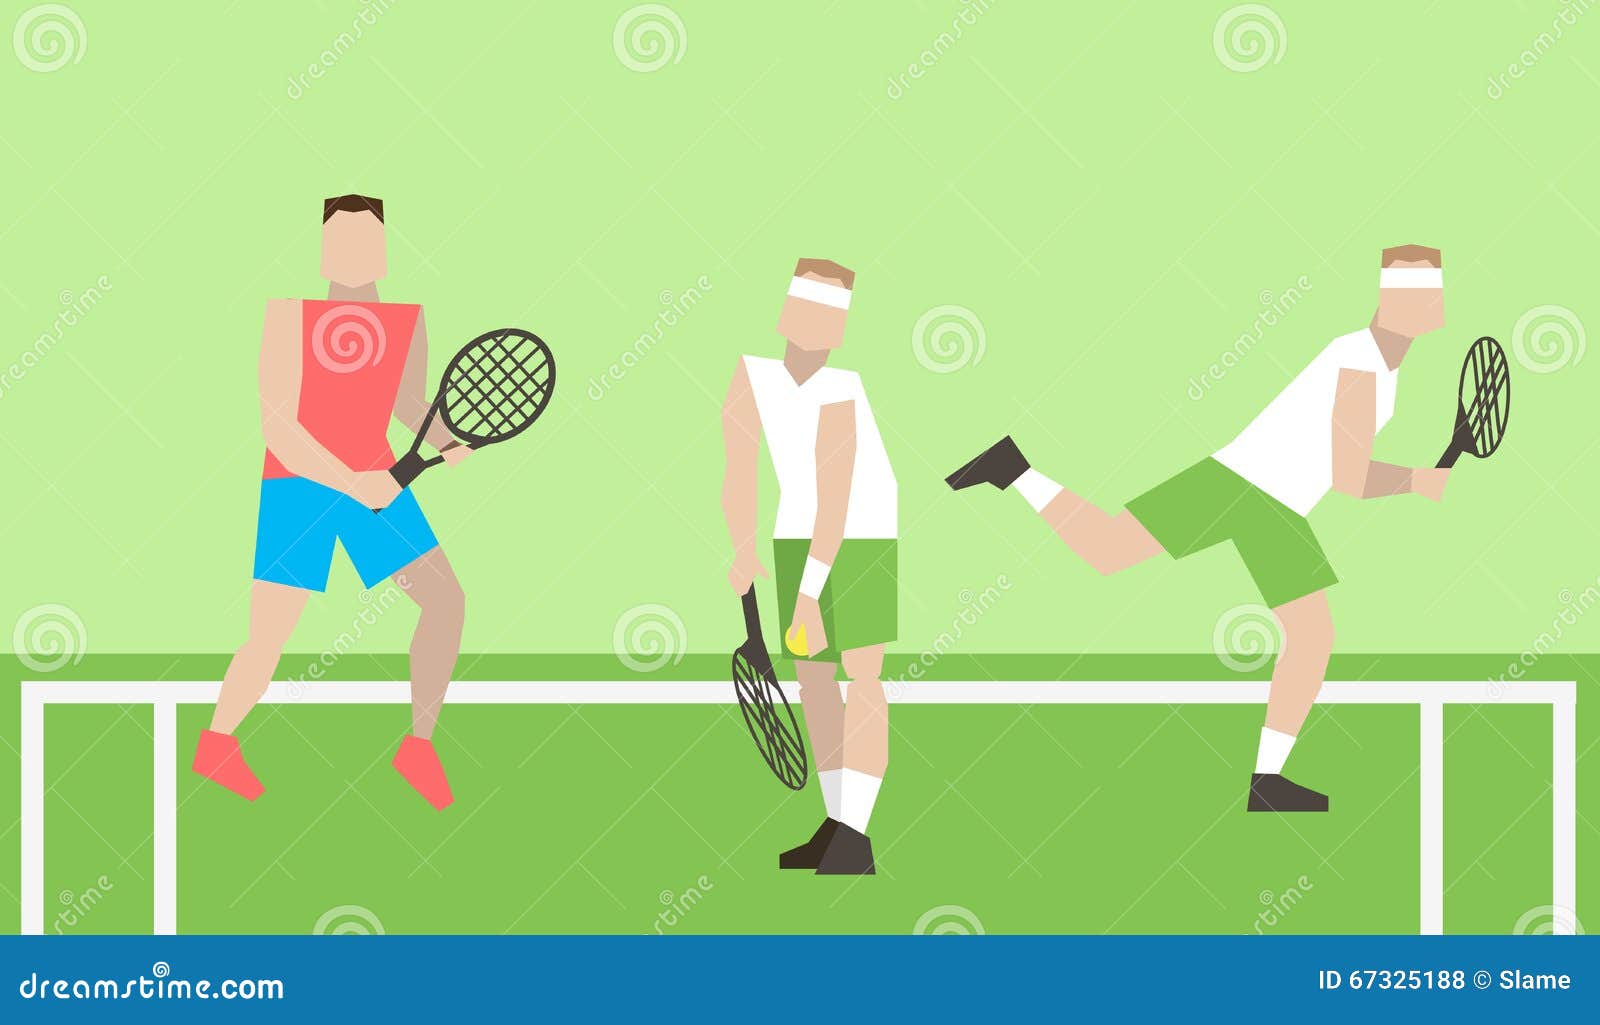 Tennis Strokes Stock Illustrations – 125 Tennis Strokes Stock  Illustrations, Vectors & Clipart - Dreamstime